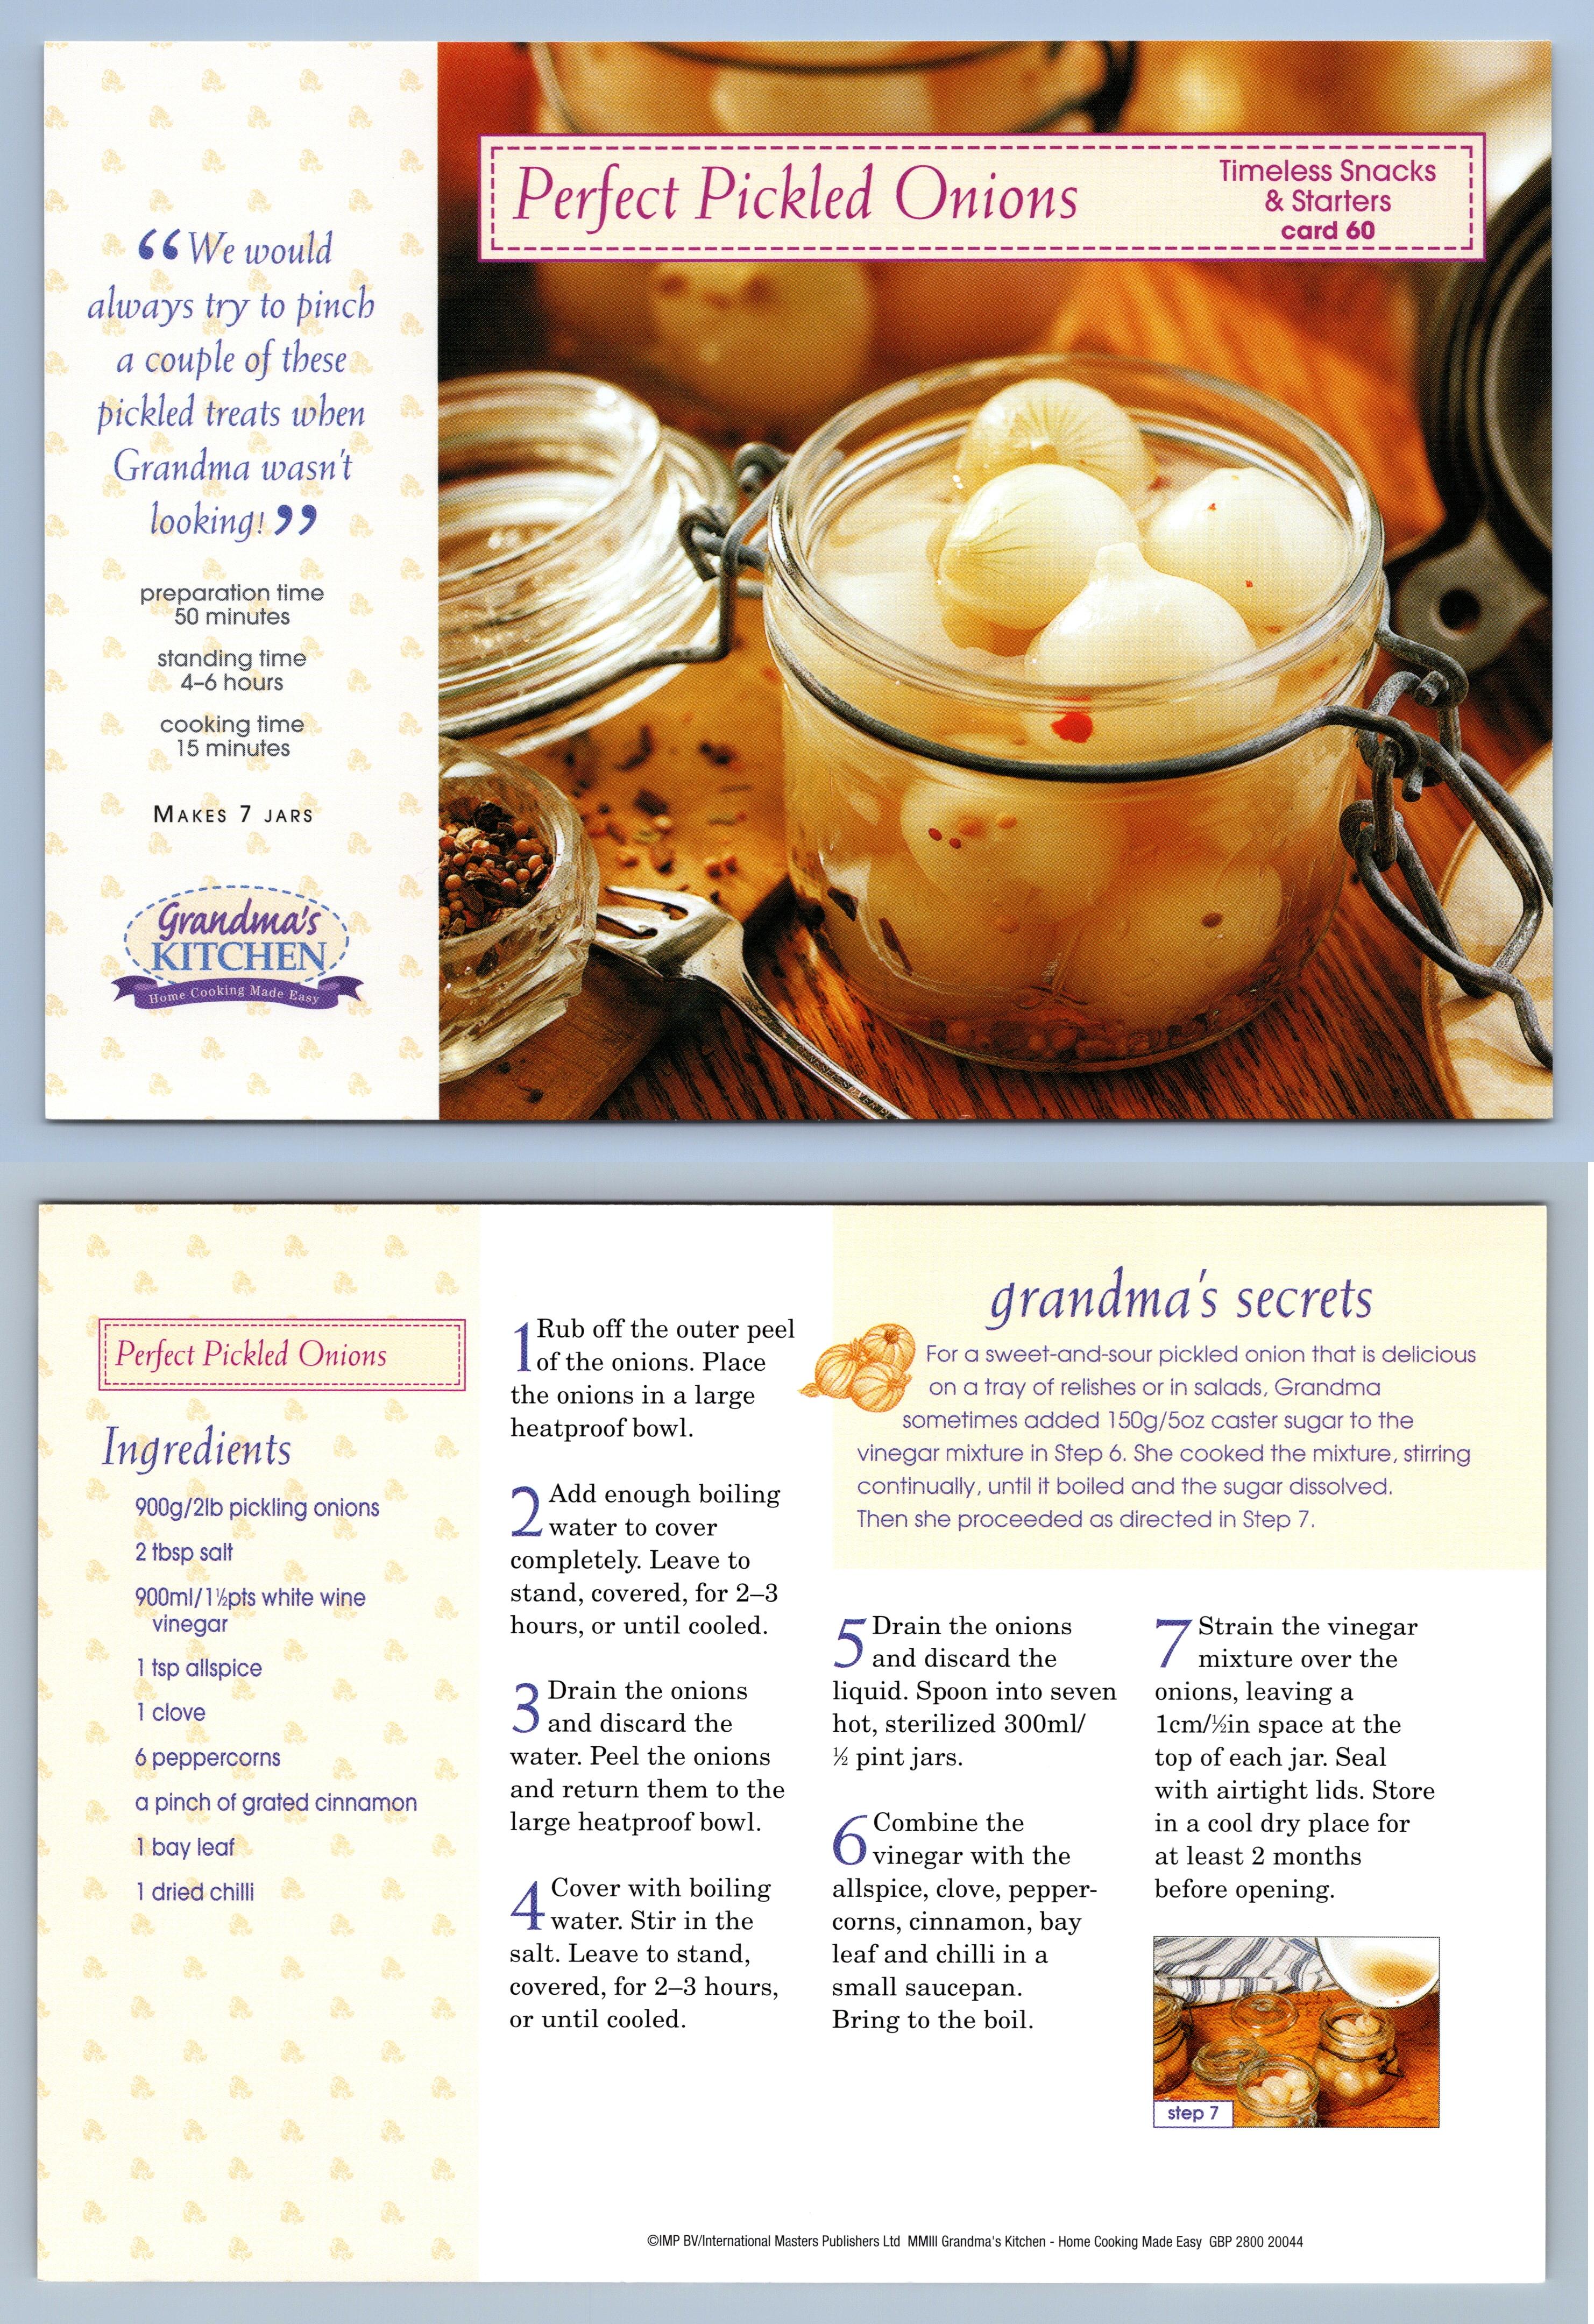 Perfect Pickled Onions 60 Snacks Grandma's Kitchen Recipe Card